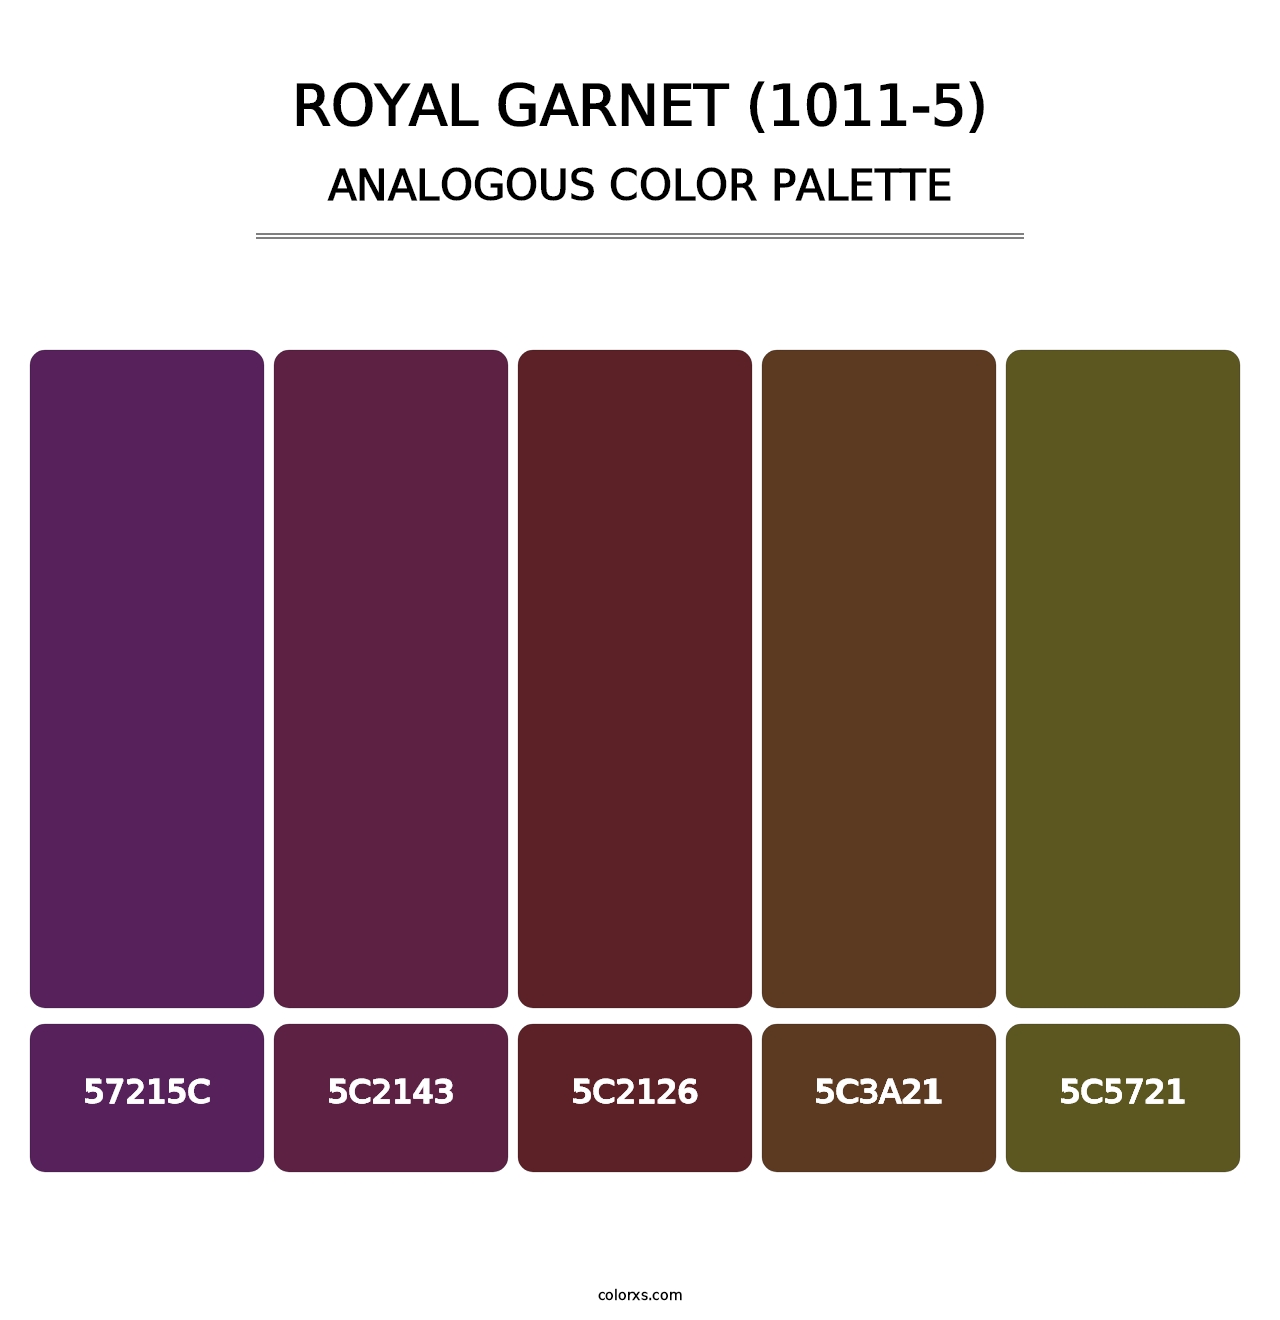 Royal Garnet (1011-5) - Analogous Color Palette